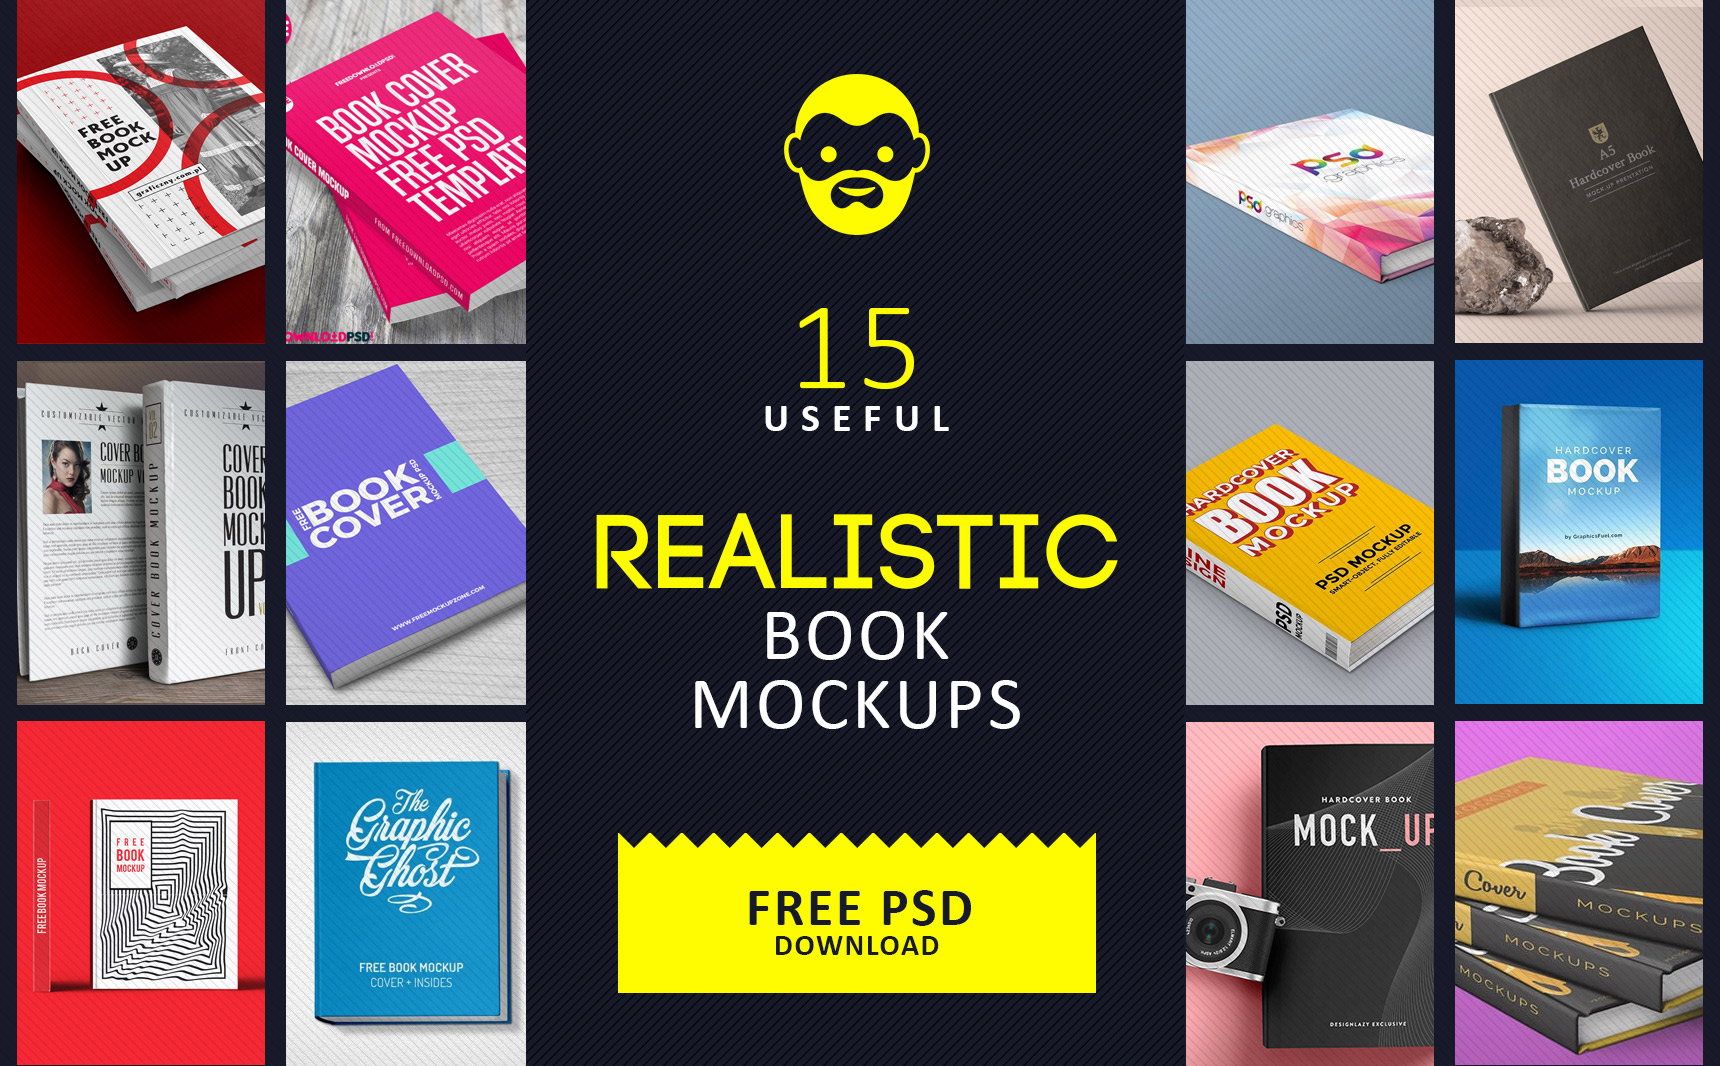 Download 15 Useful Realistic Book Mockups Free Psd Psddaddy Com